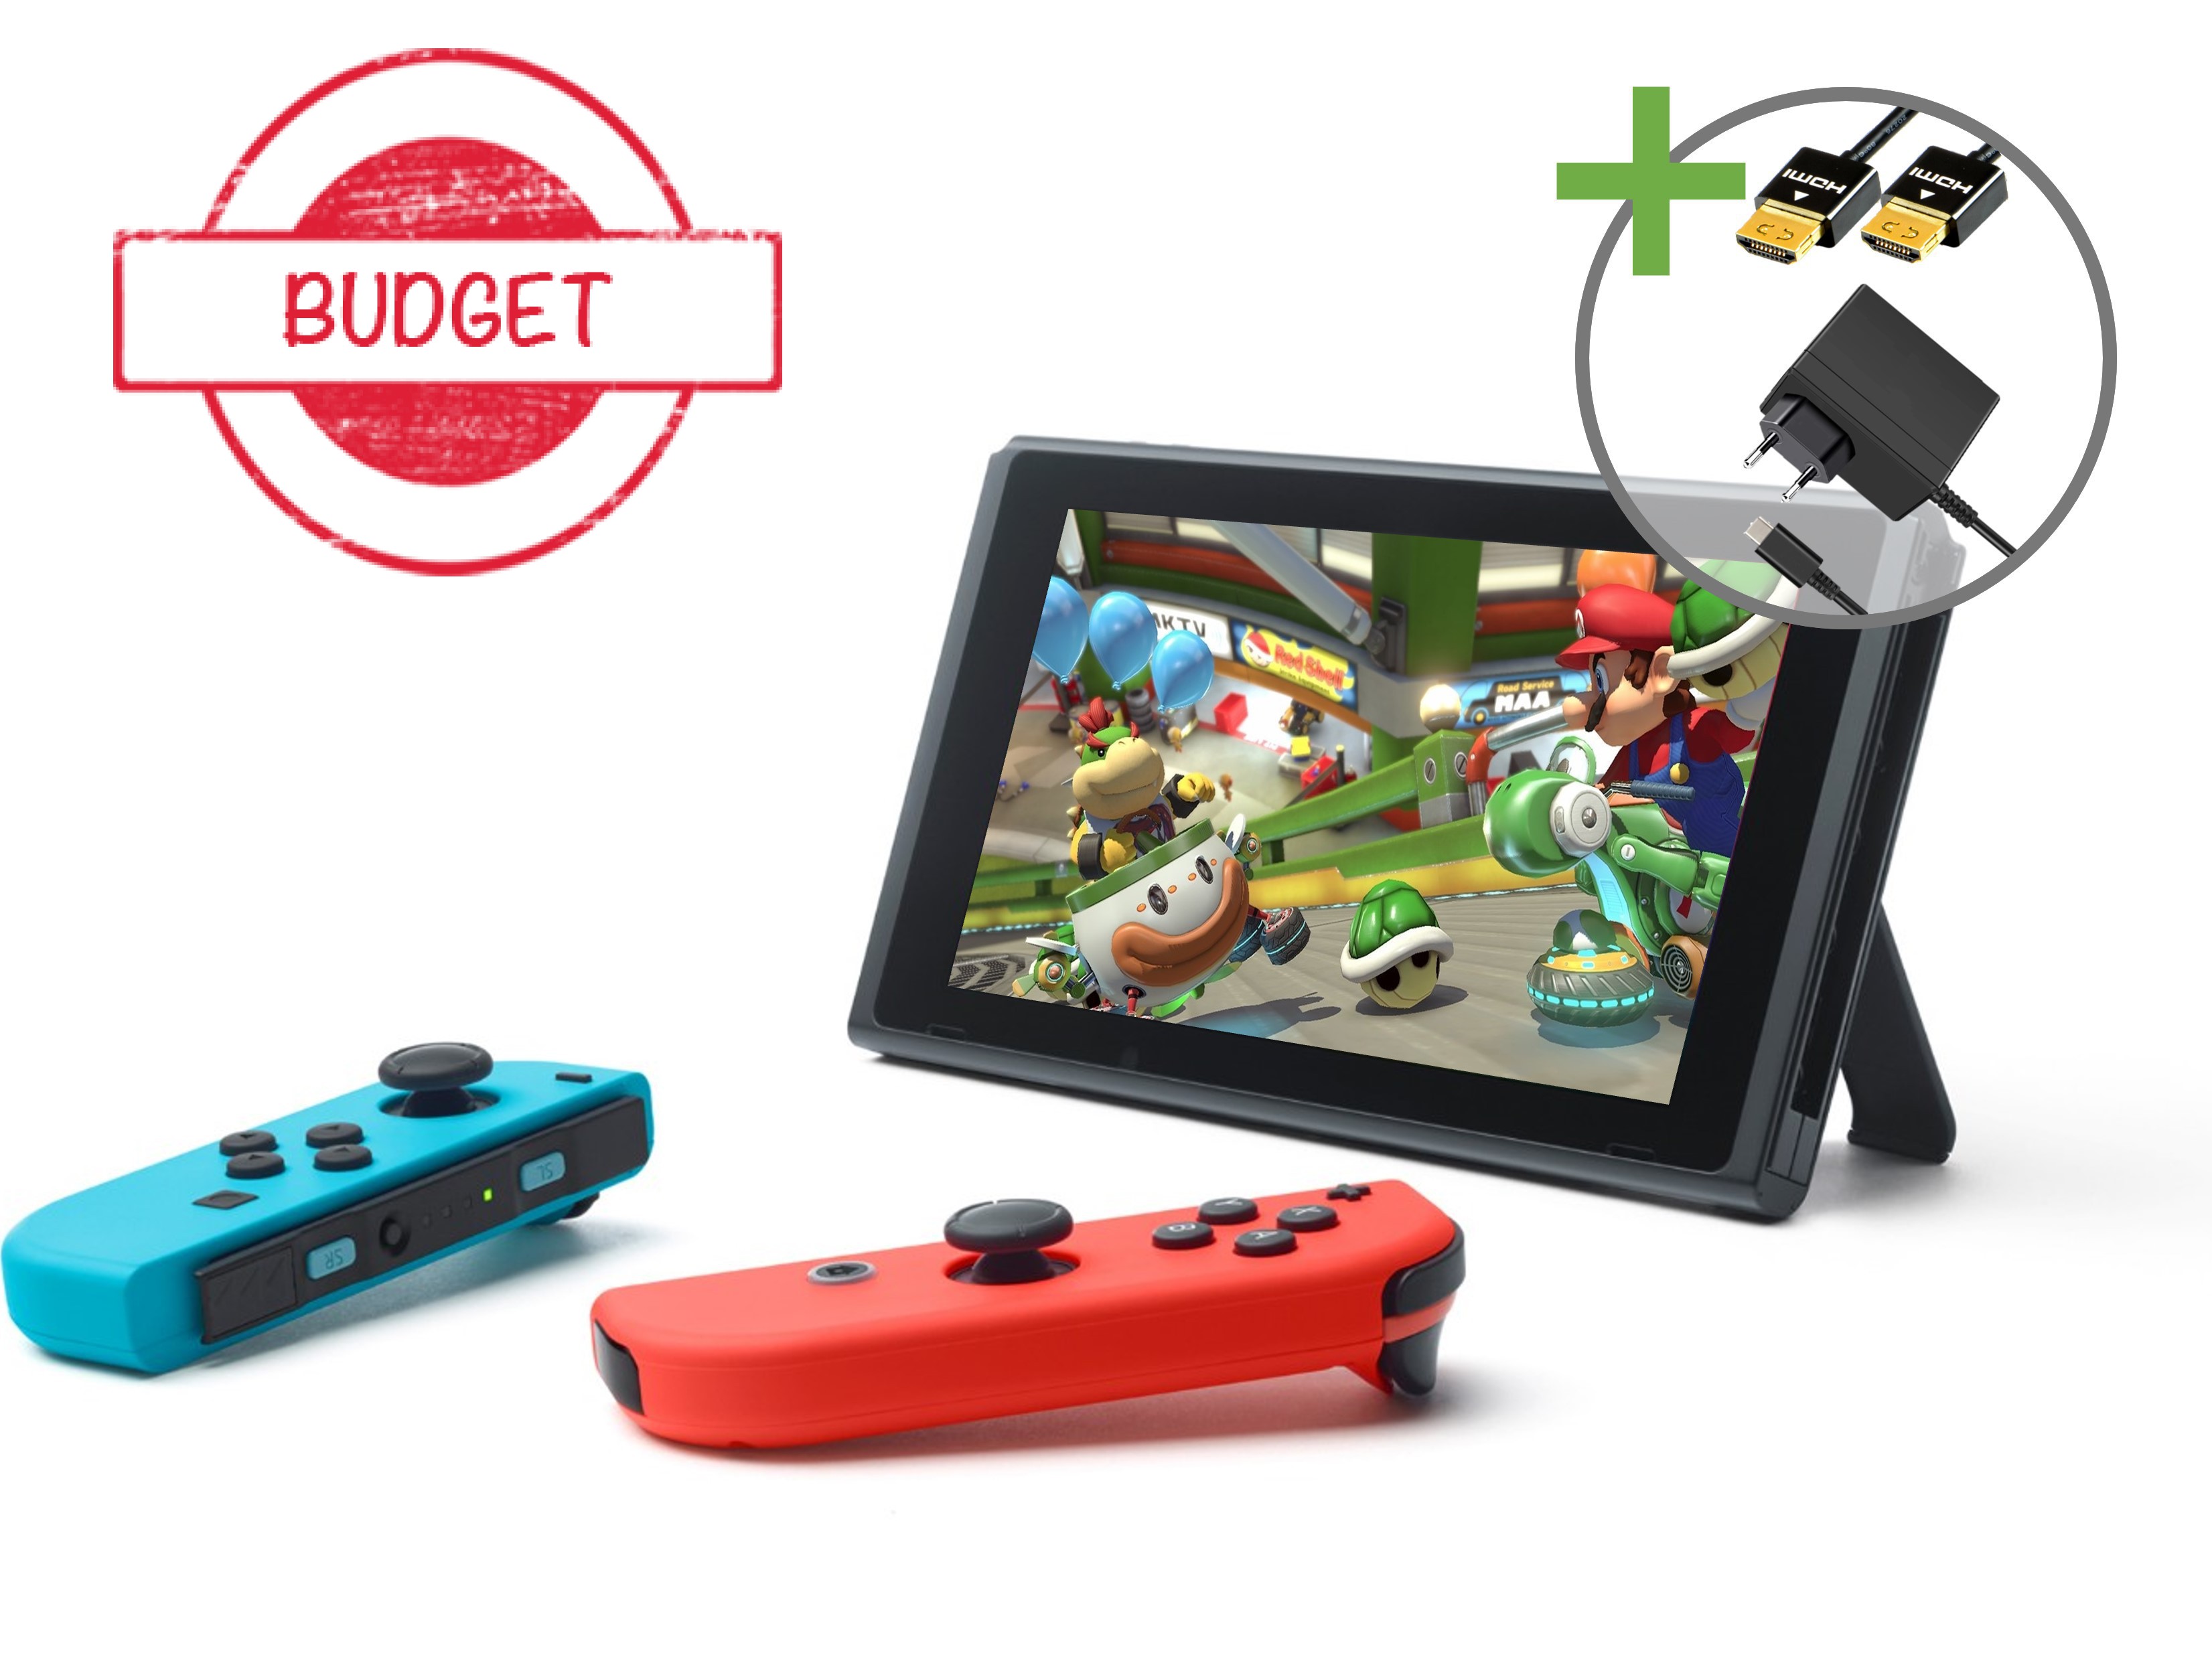 Nintendo Switch Starter Pack - Mario Kart 8 Deluxe Rood/Blauw Edition - Budget - Nintendo Switch Hardware - 3